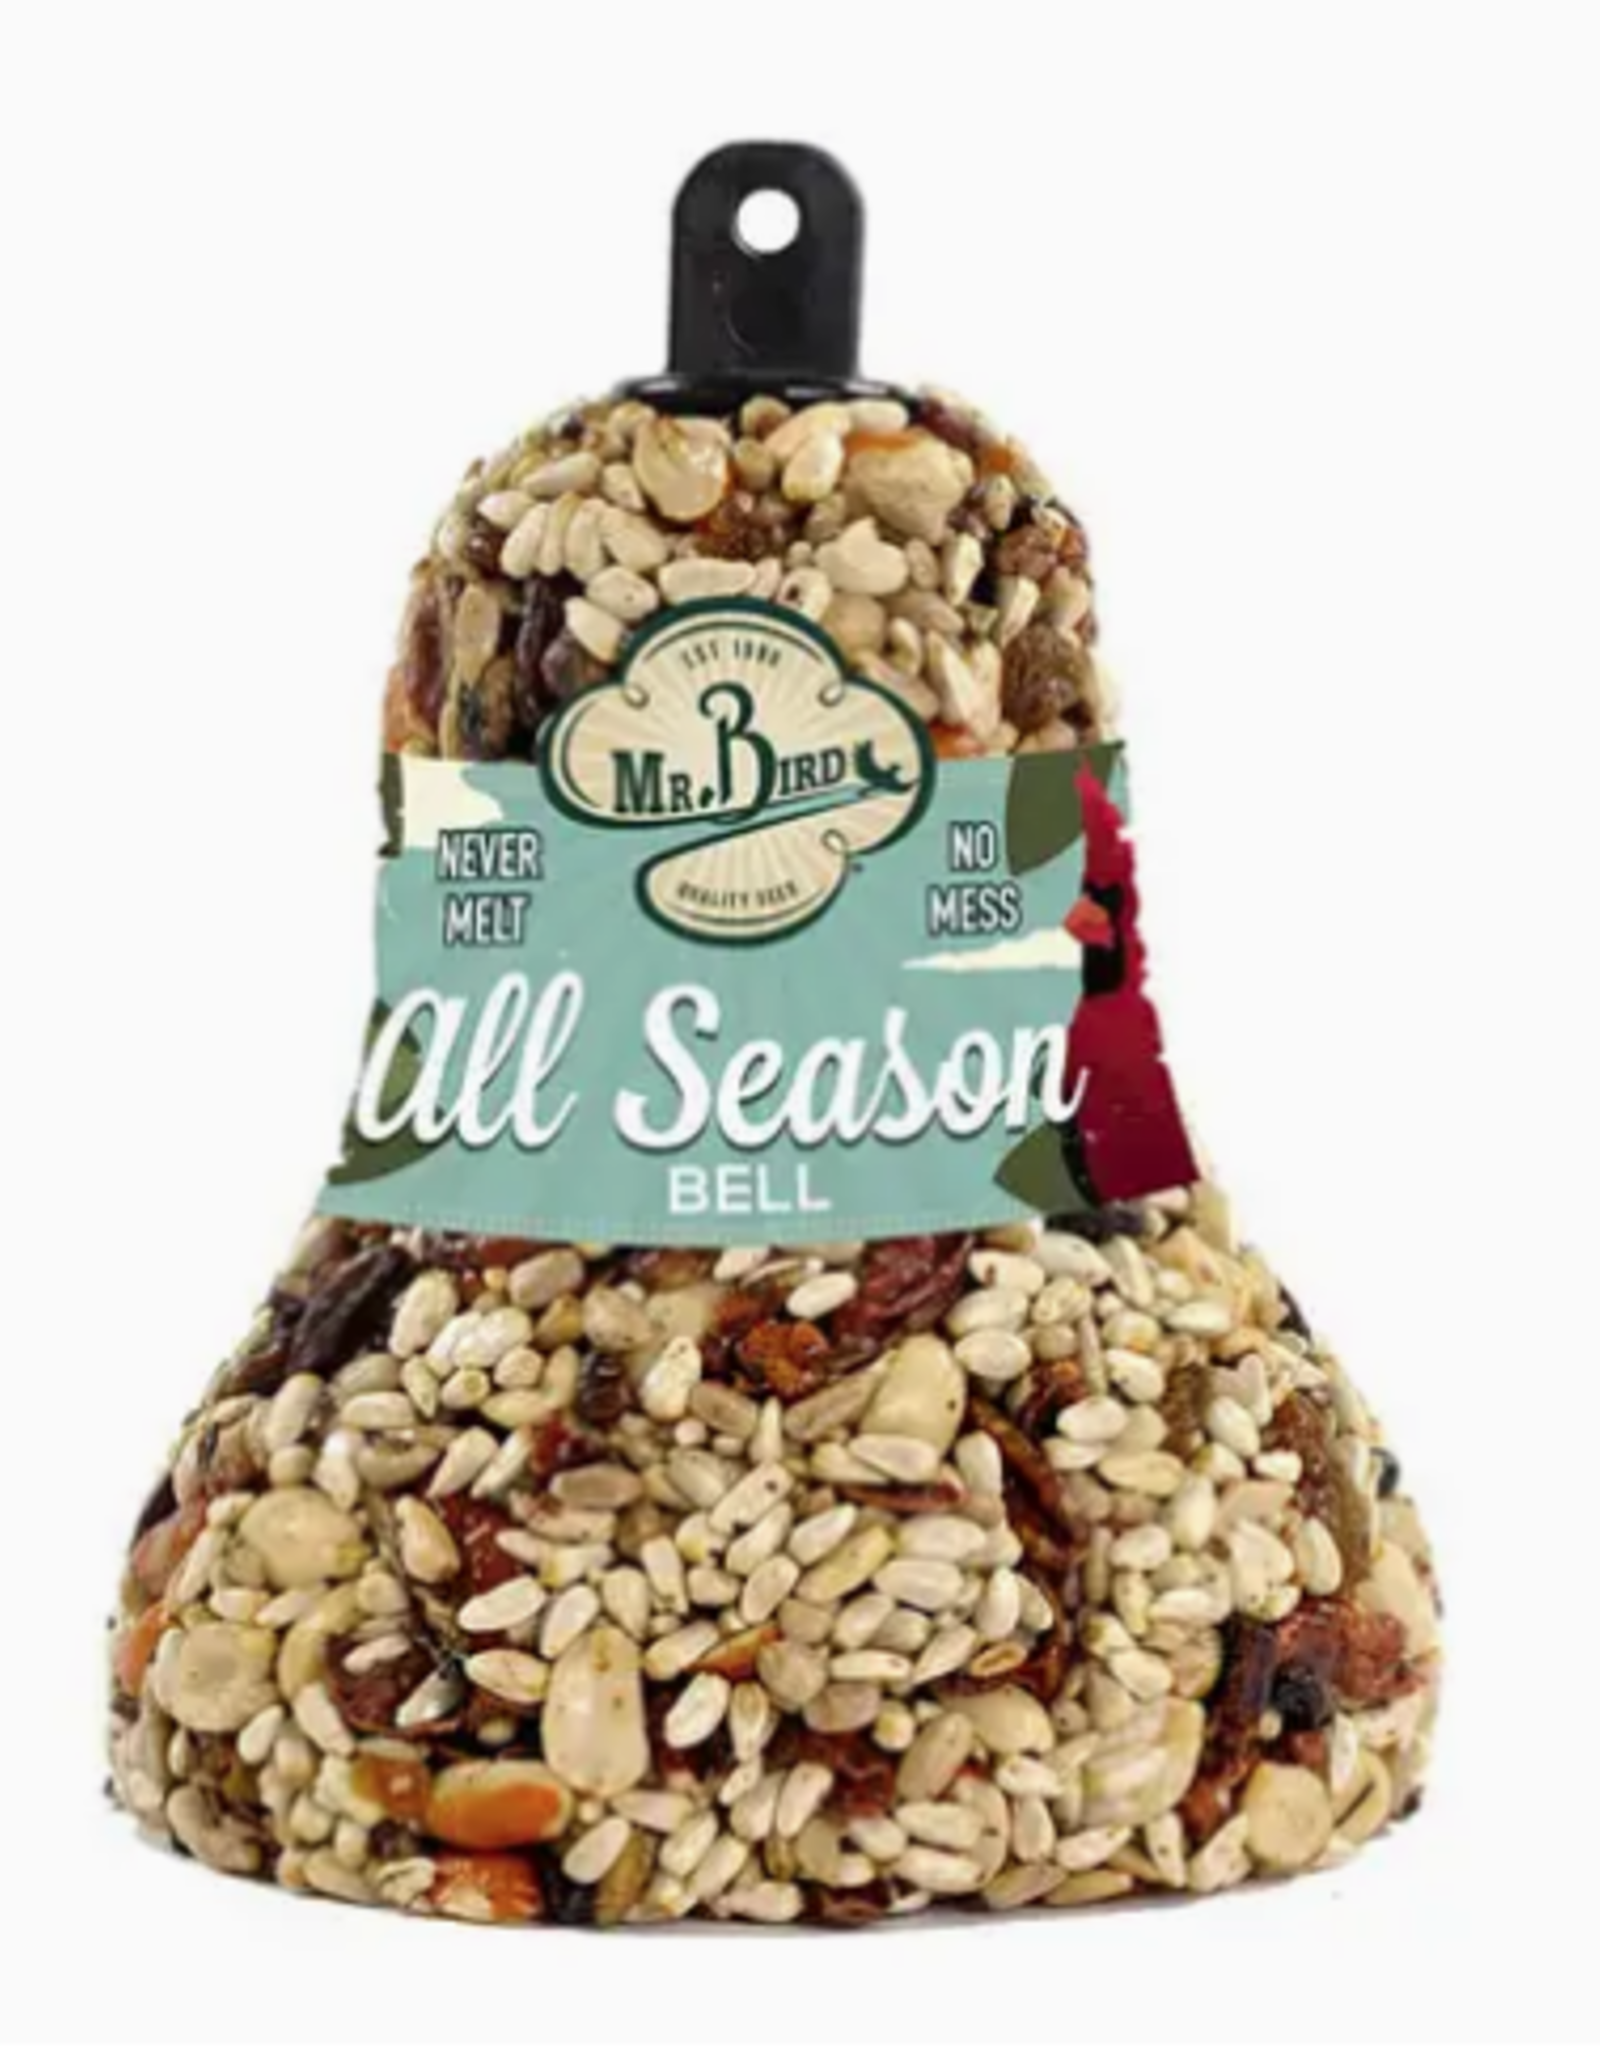 All Season Bell Fruit & Nut  Bird Seed